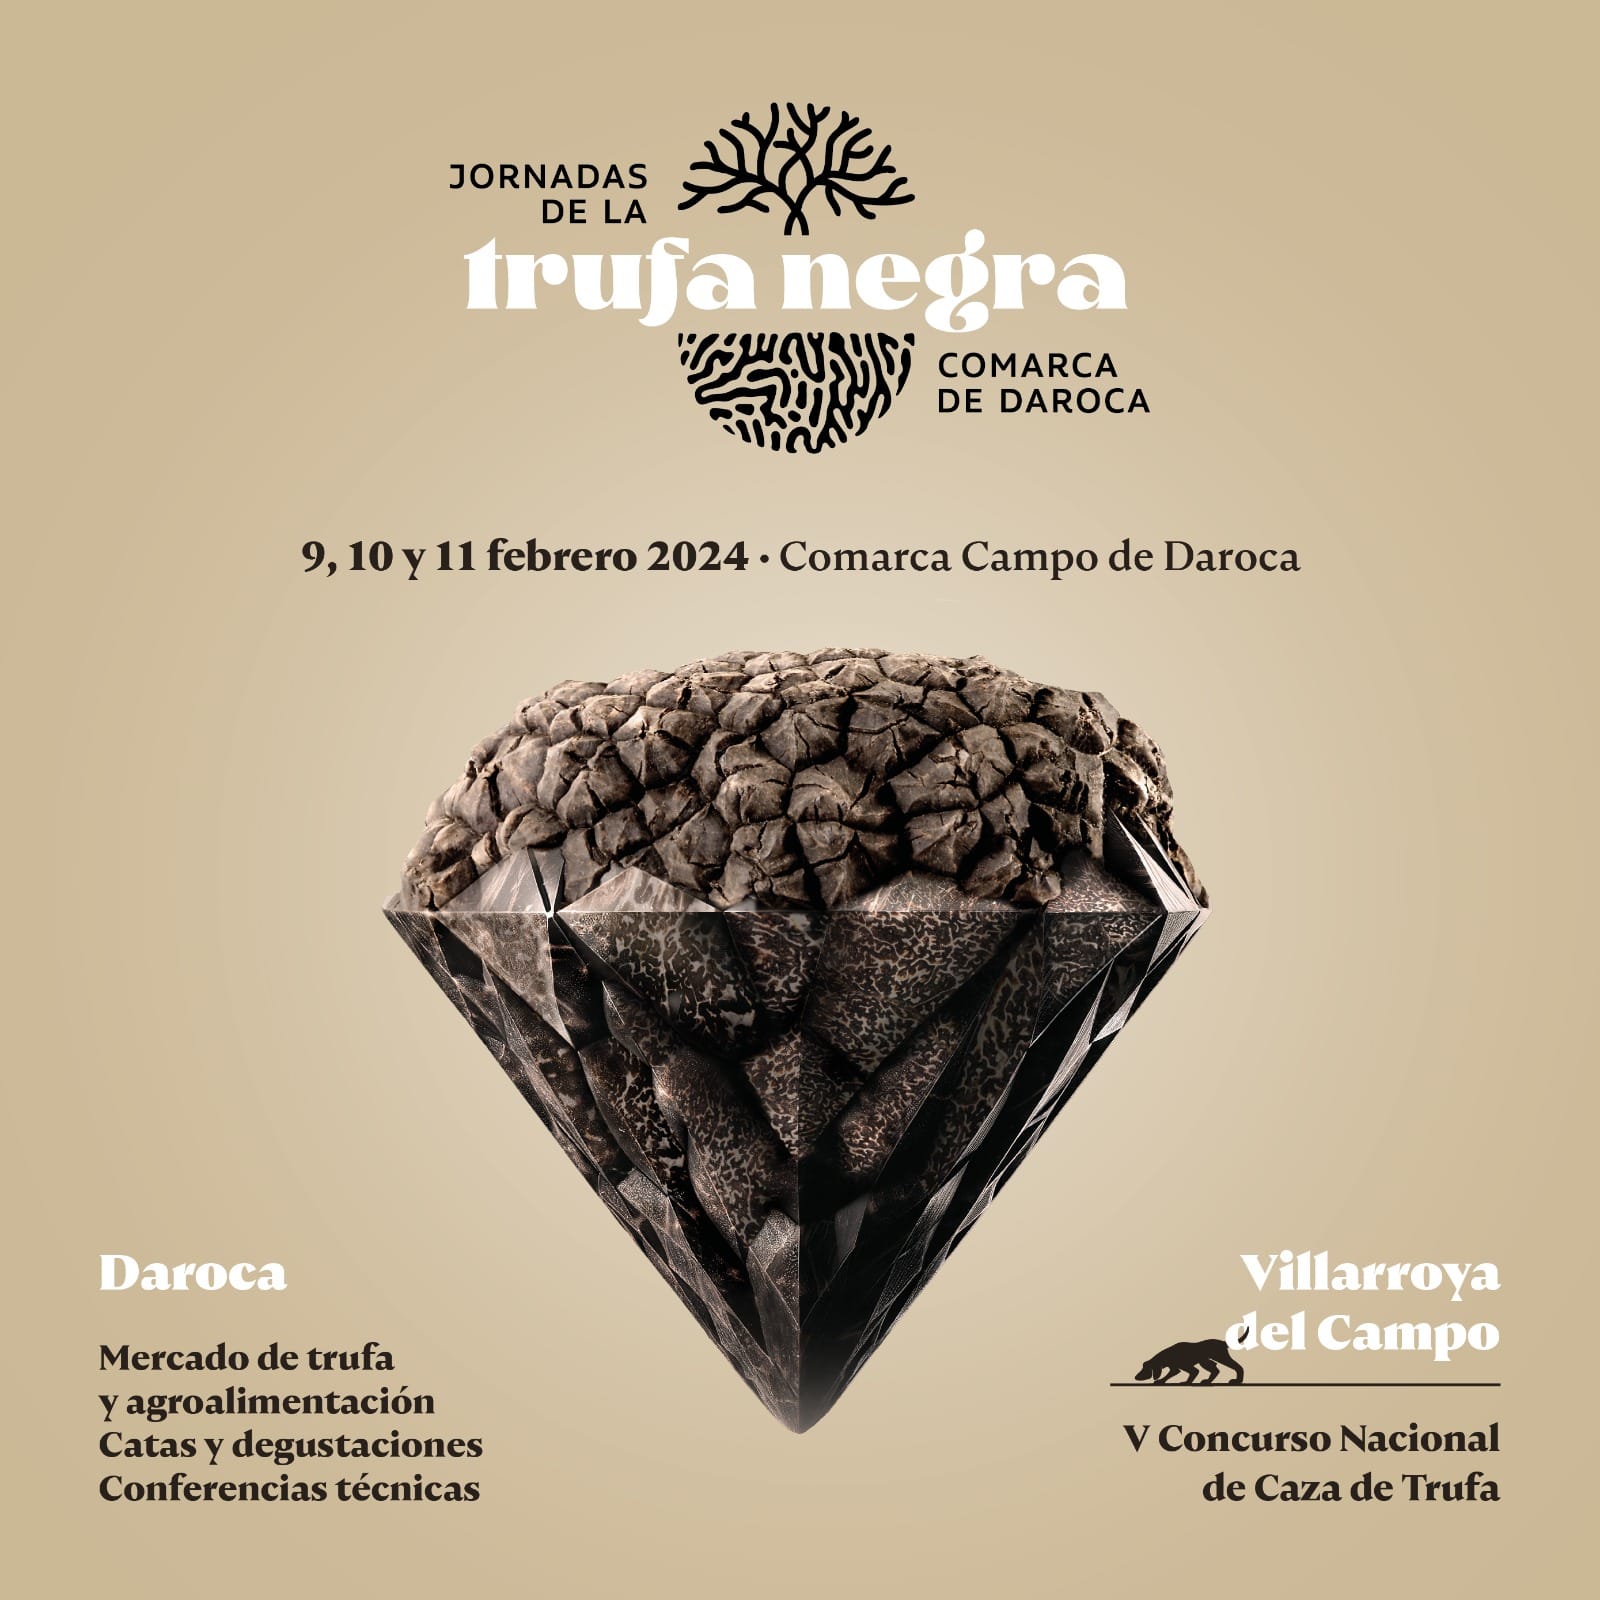 Jornadas de la trufa negra Comarca de Daroca 2024 : Turismo de Aragón